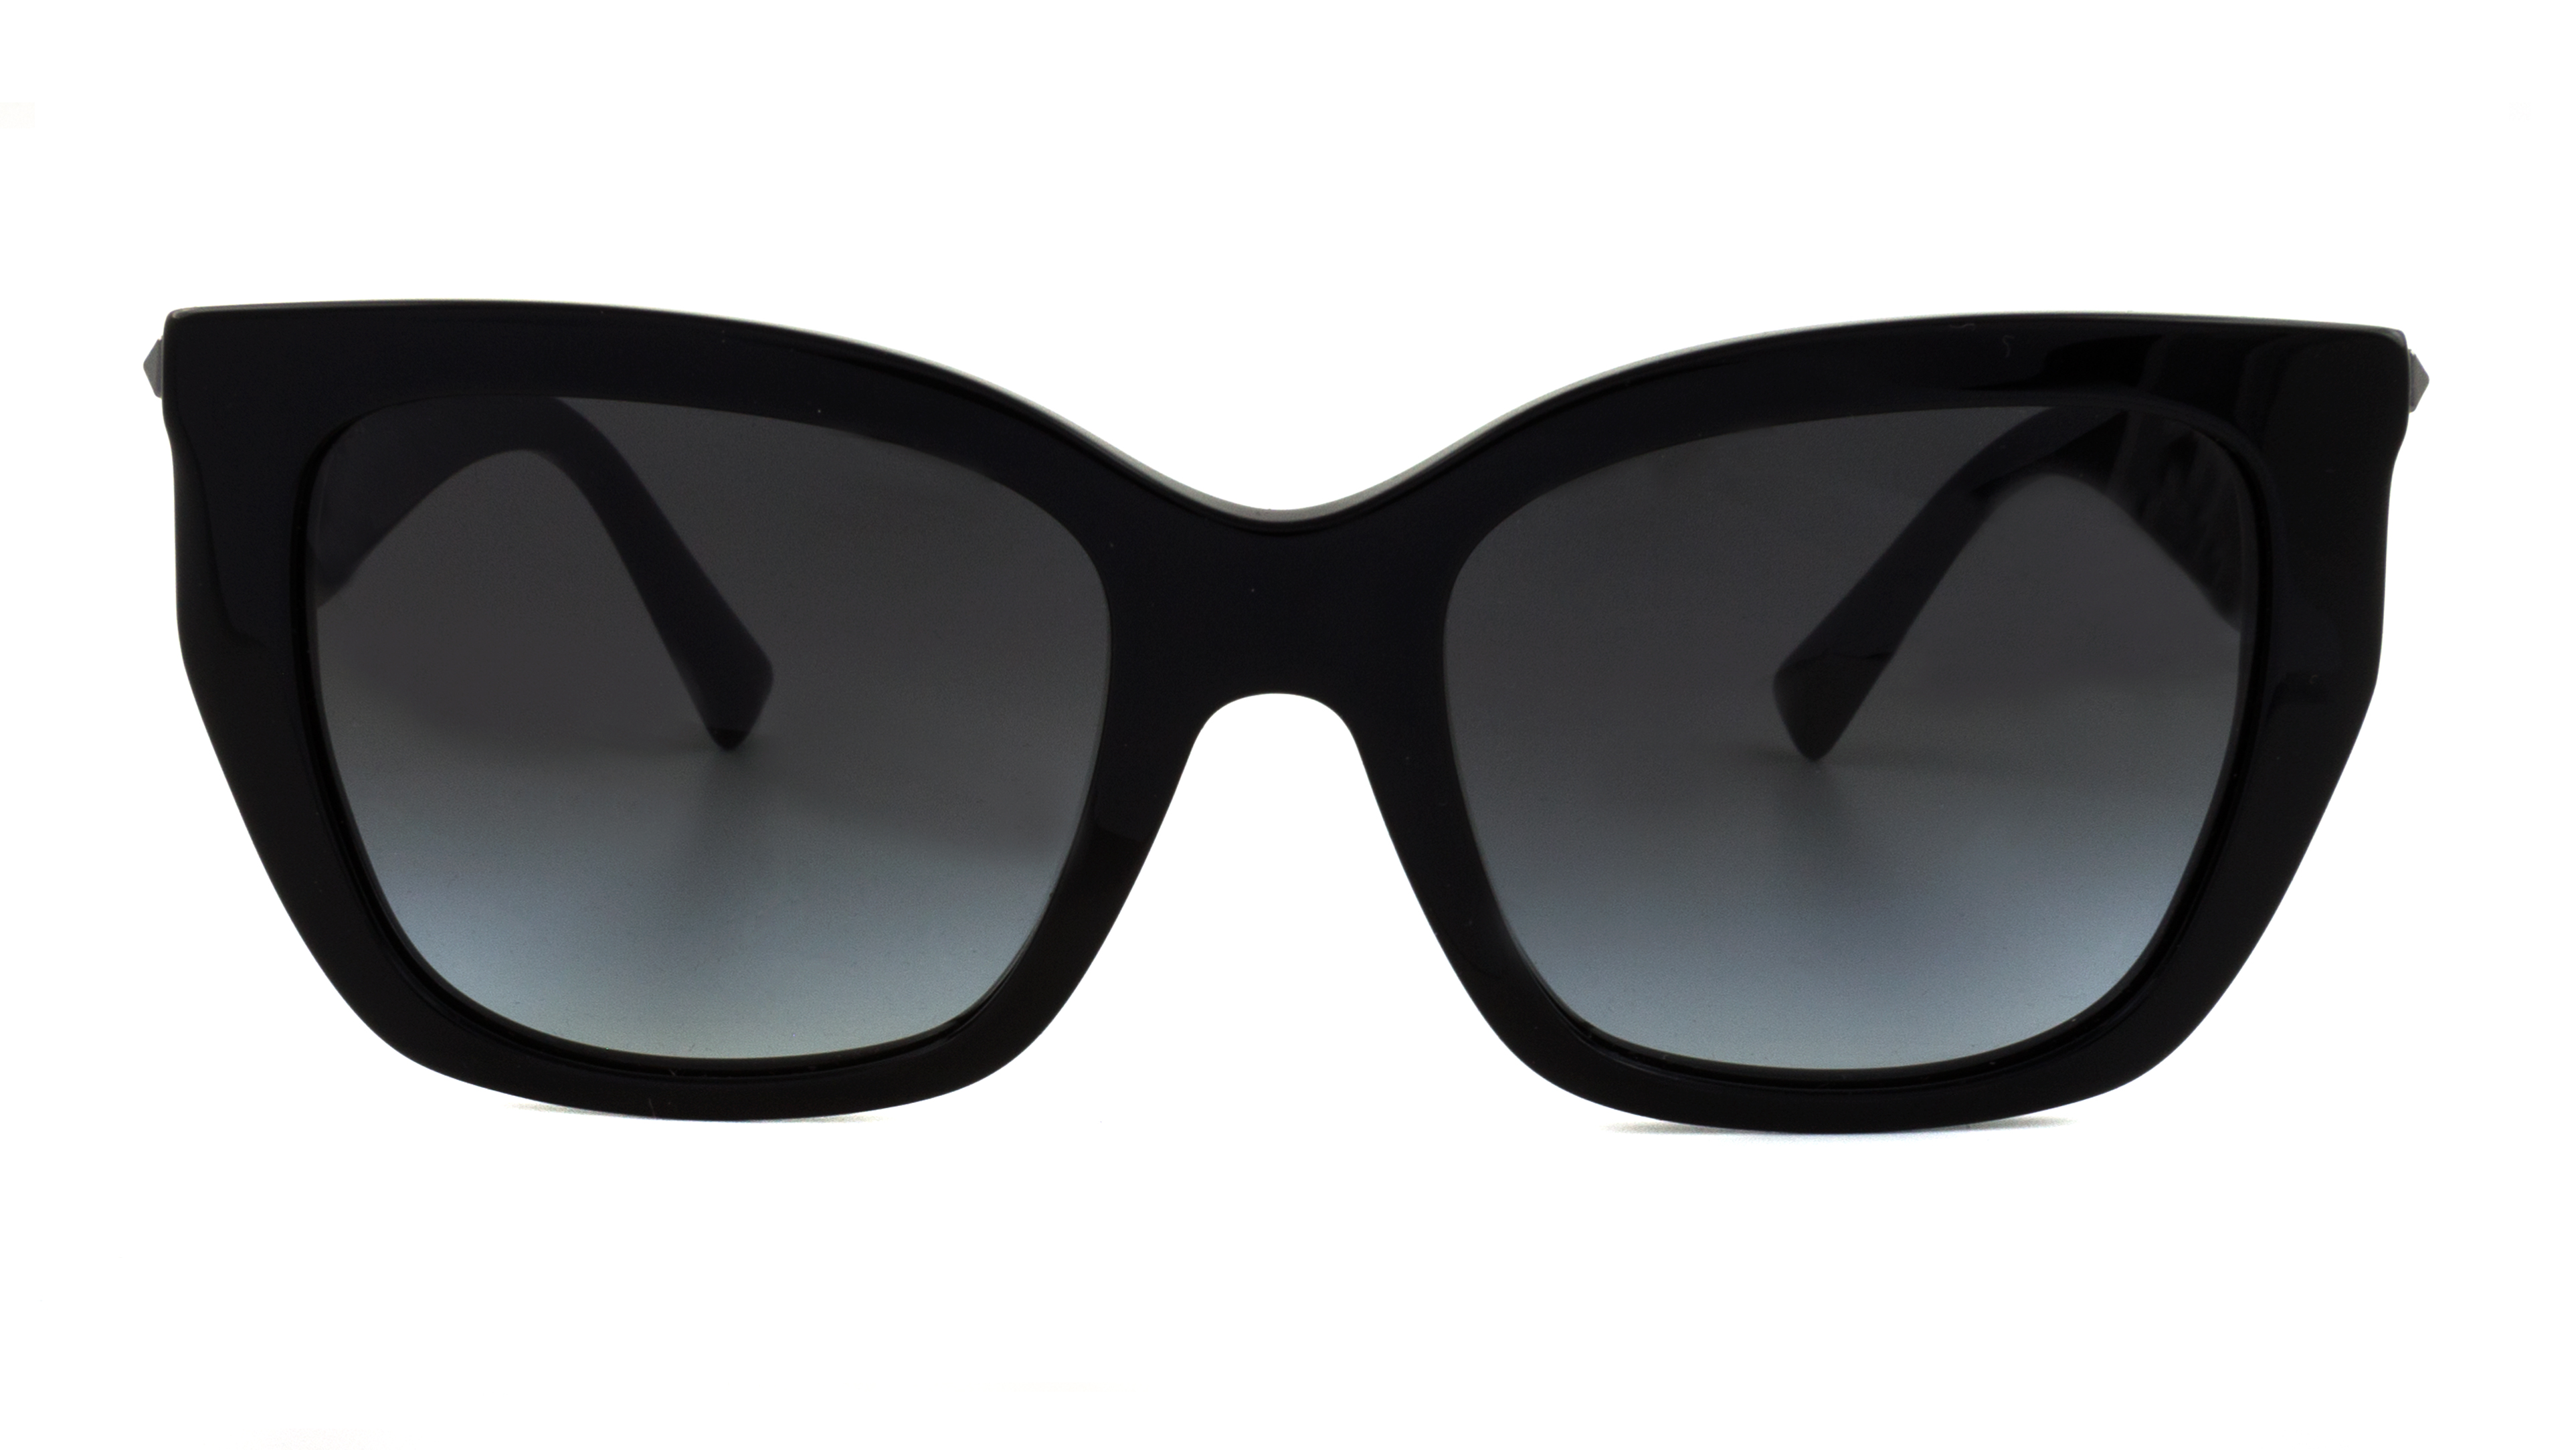 Valentino Glasses Flash Sales, 51% OFF | www.emanagreen.com